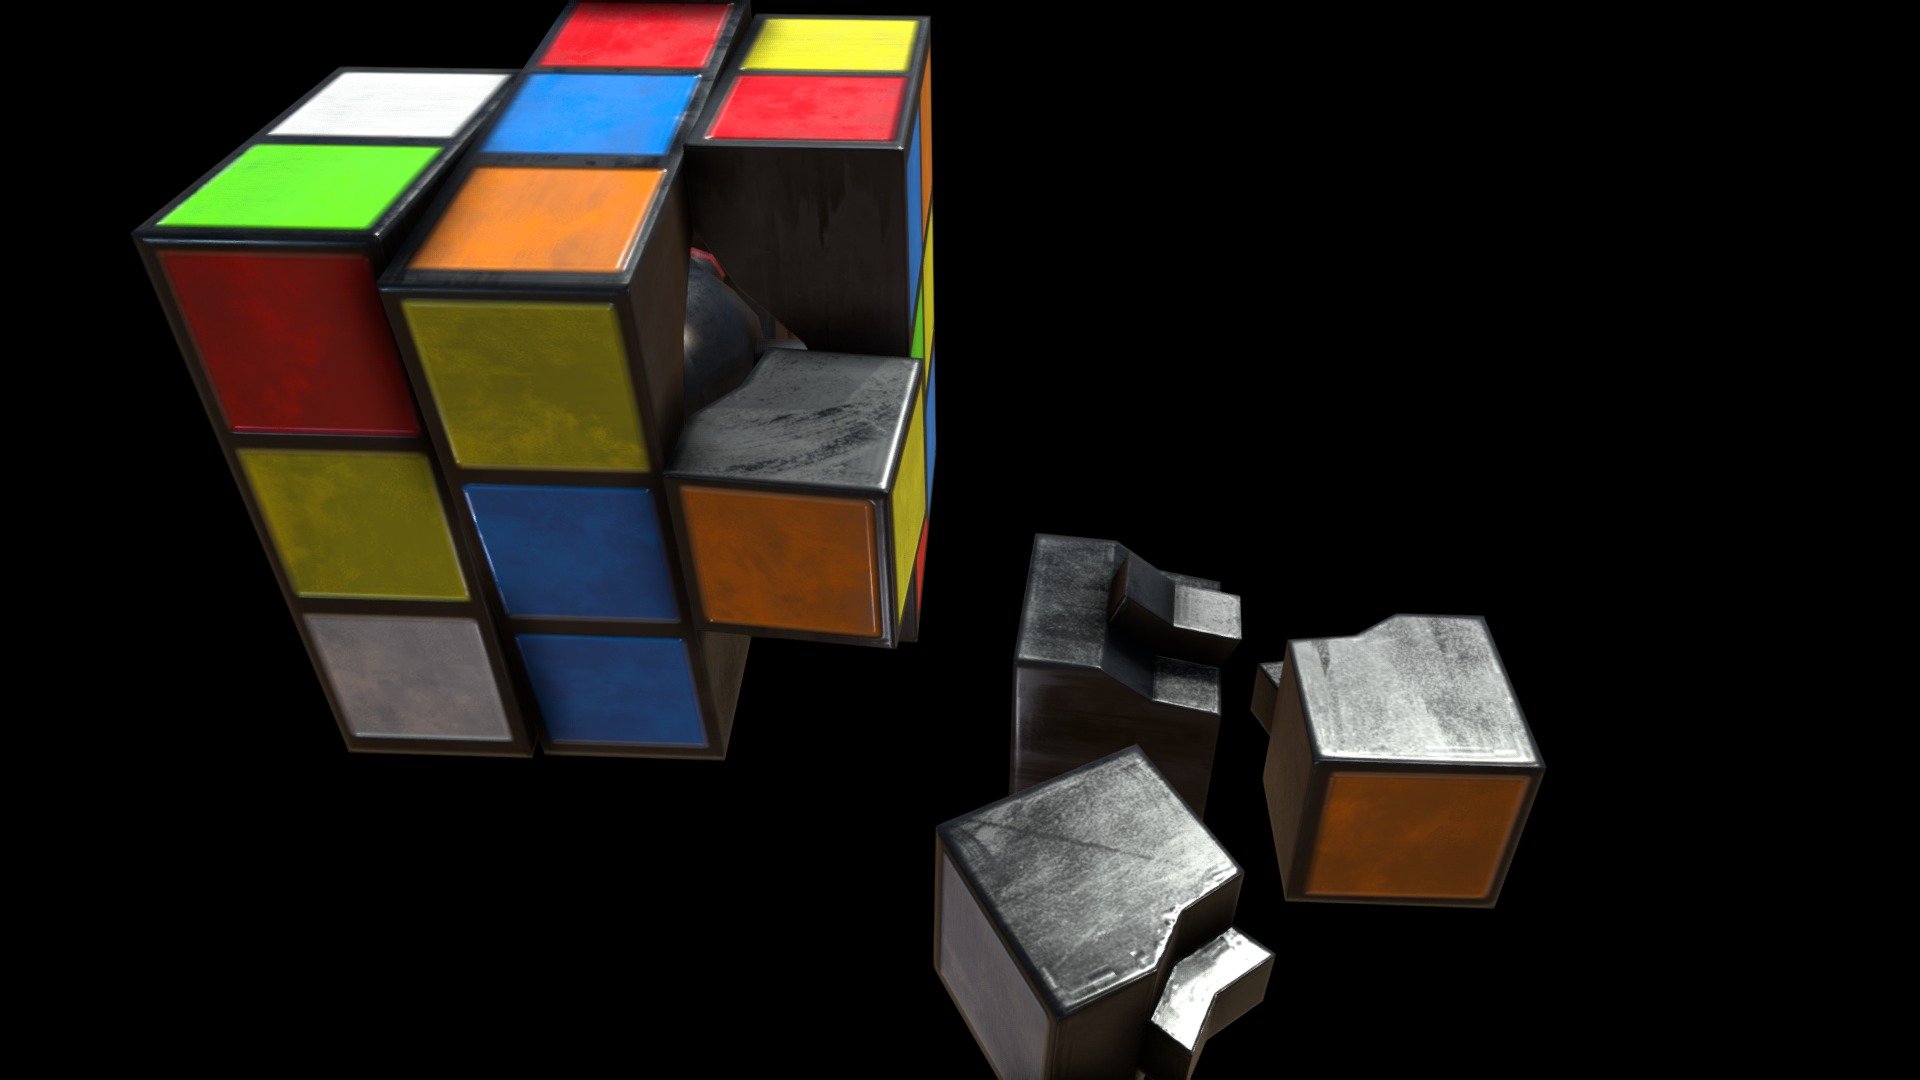 Rubic Cube